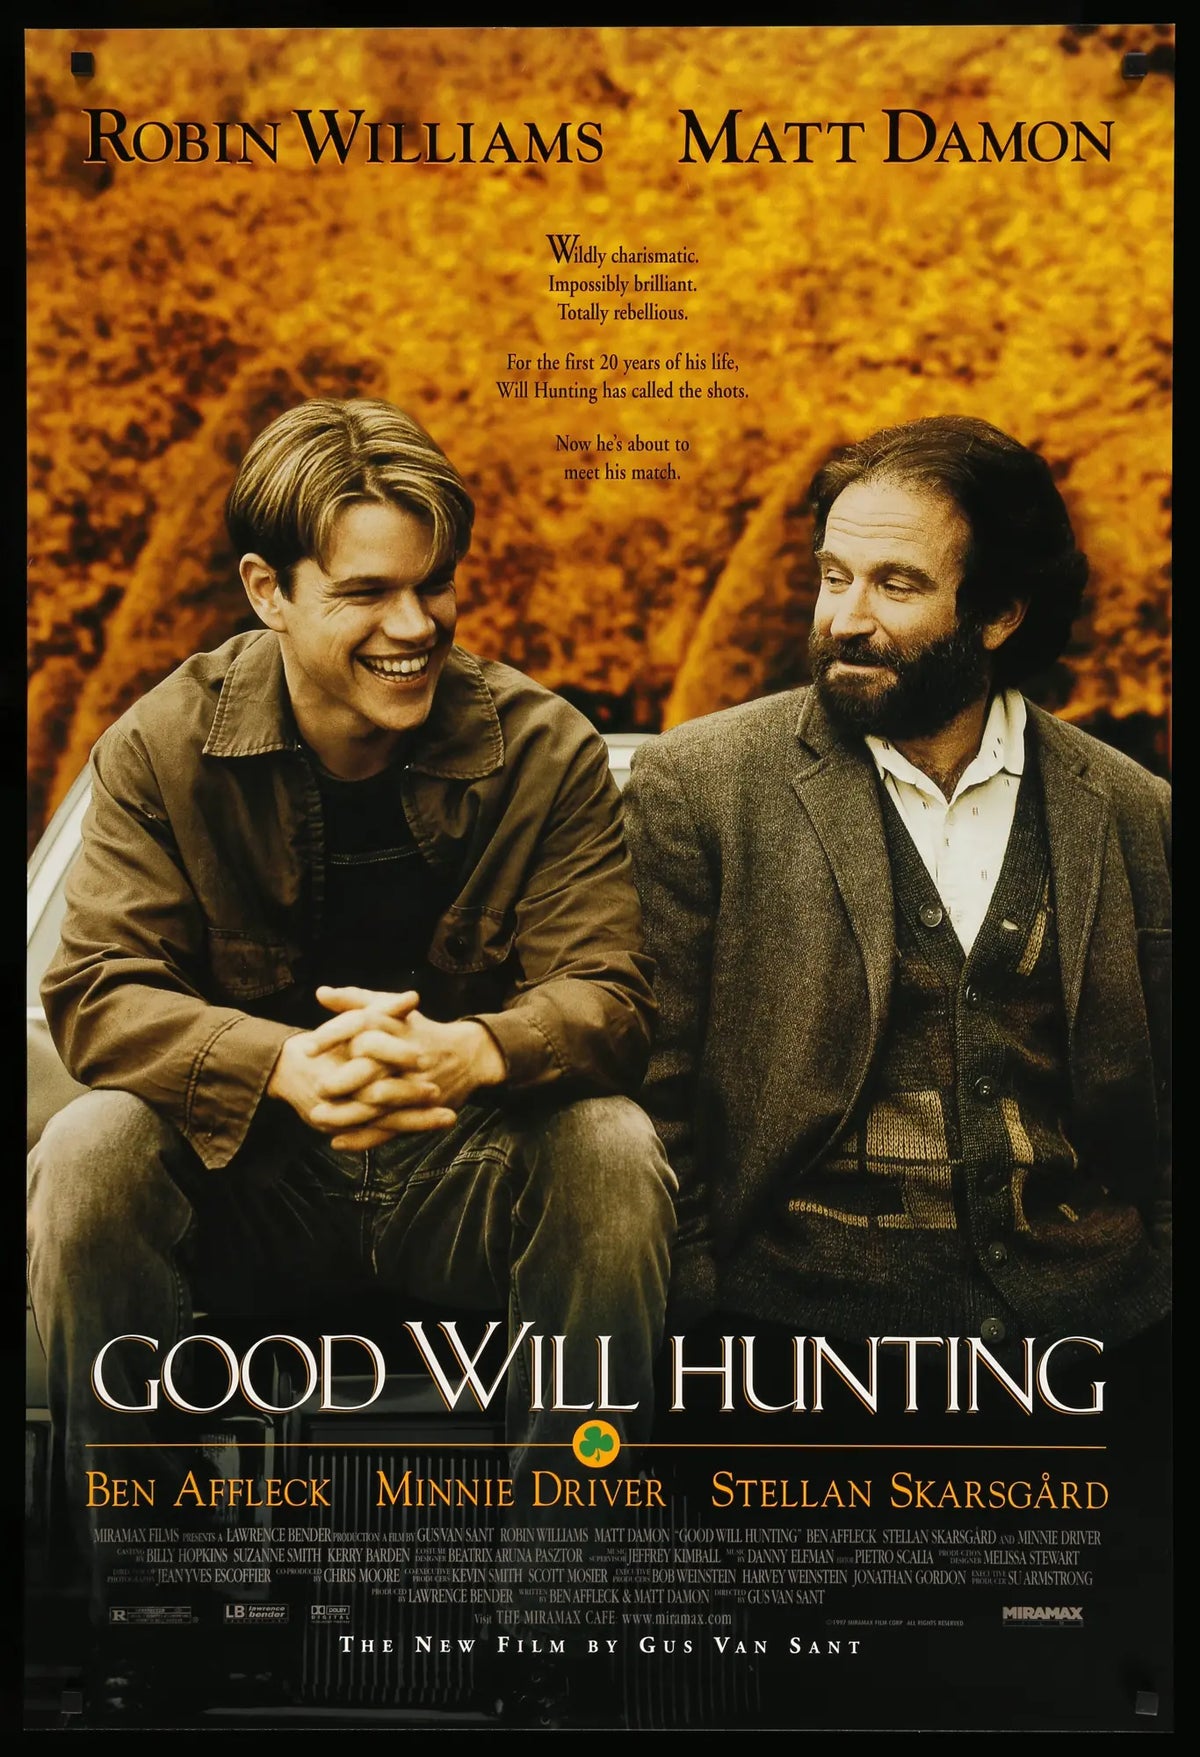 Good Will Hunting (1997) original movie poster for sale at Original Film Art